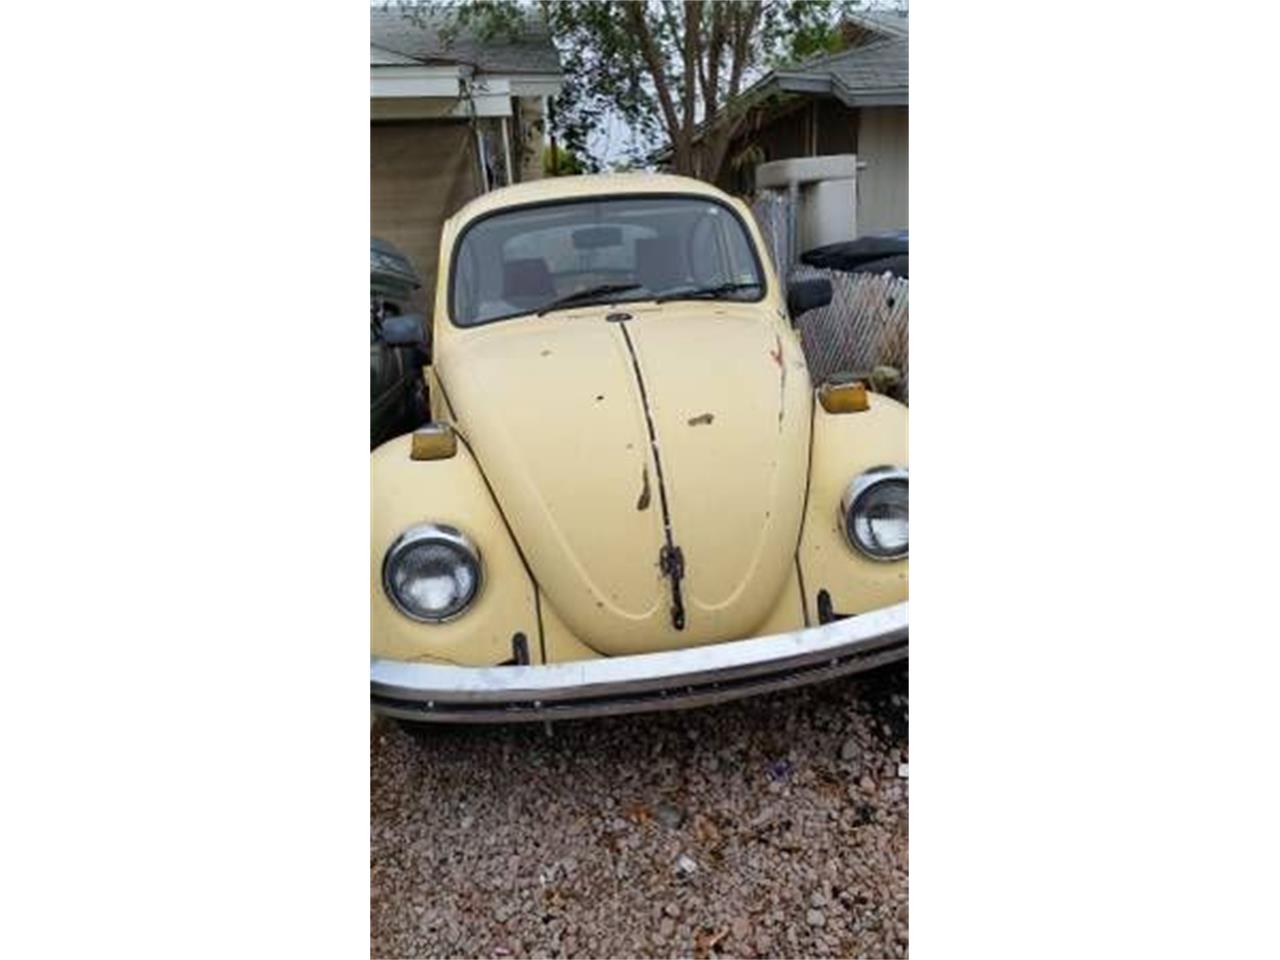 1972 Volkswagen Beetle for sale in Cadillac, MI